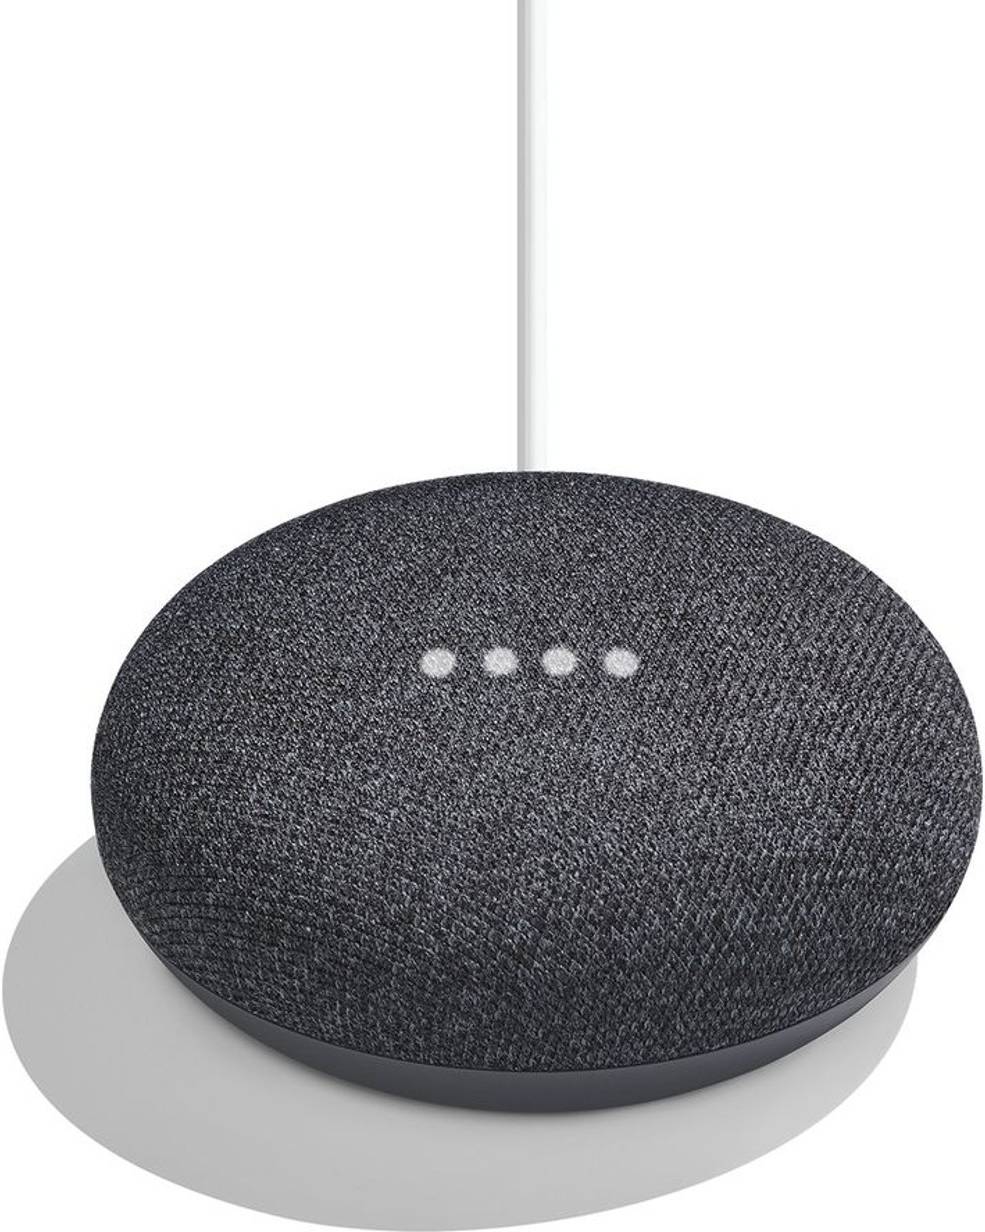 Google Home Mini Smart Speaker (Charcoal Gray)